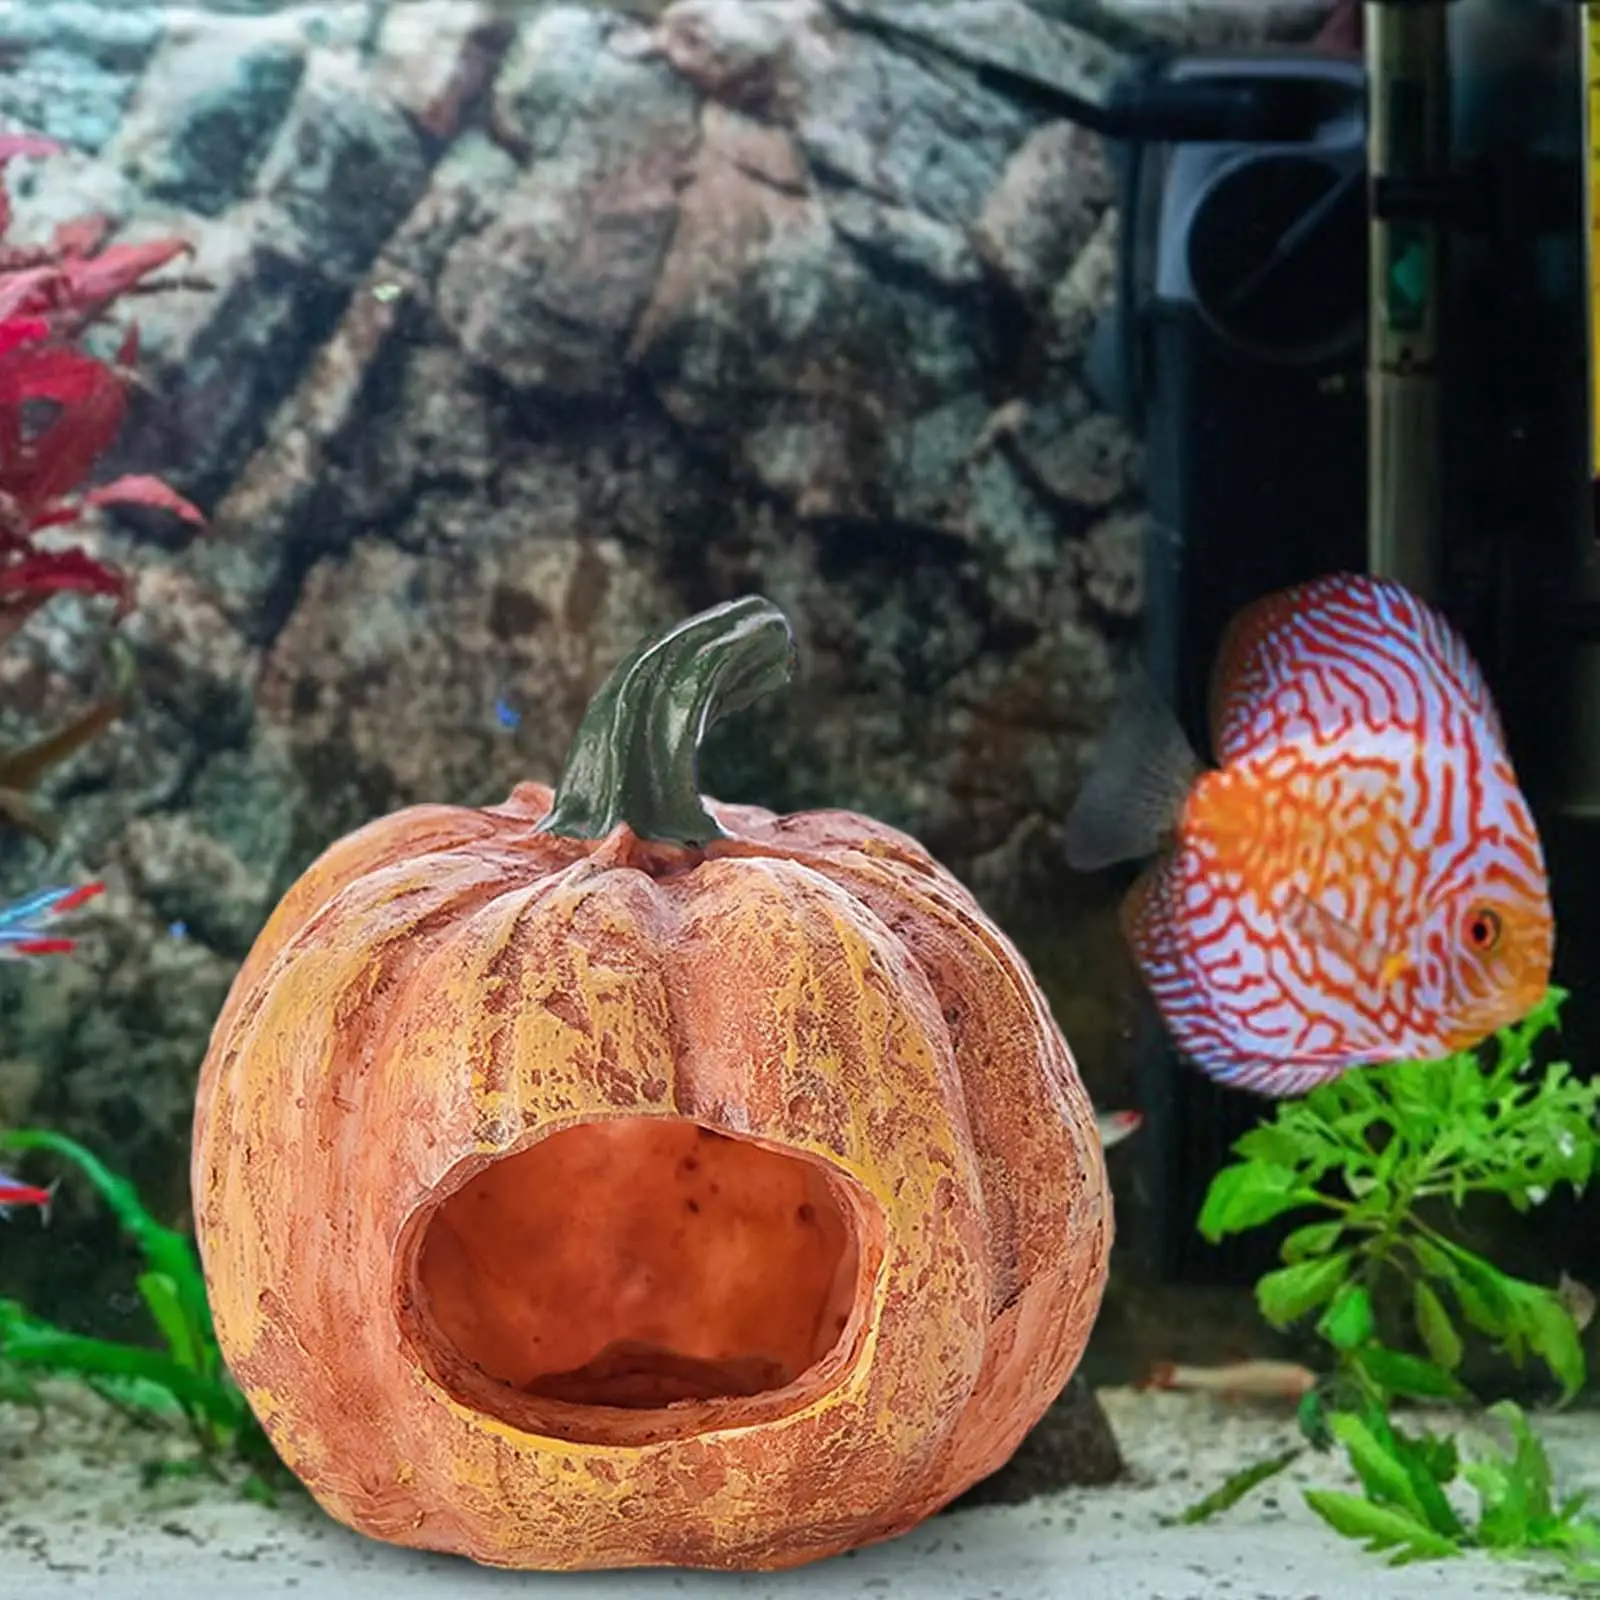 Pumpkin Fish Tank Decor Simulation Pumpkin Shelter Durable Artificial Landscaping for Aquarium Living Room Home Desk Fish Tank